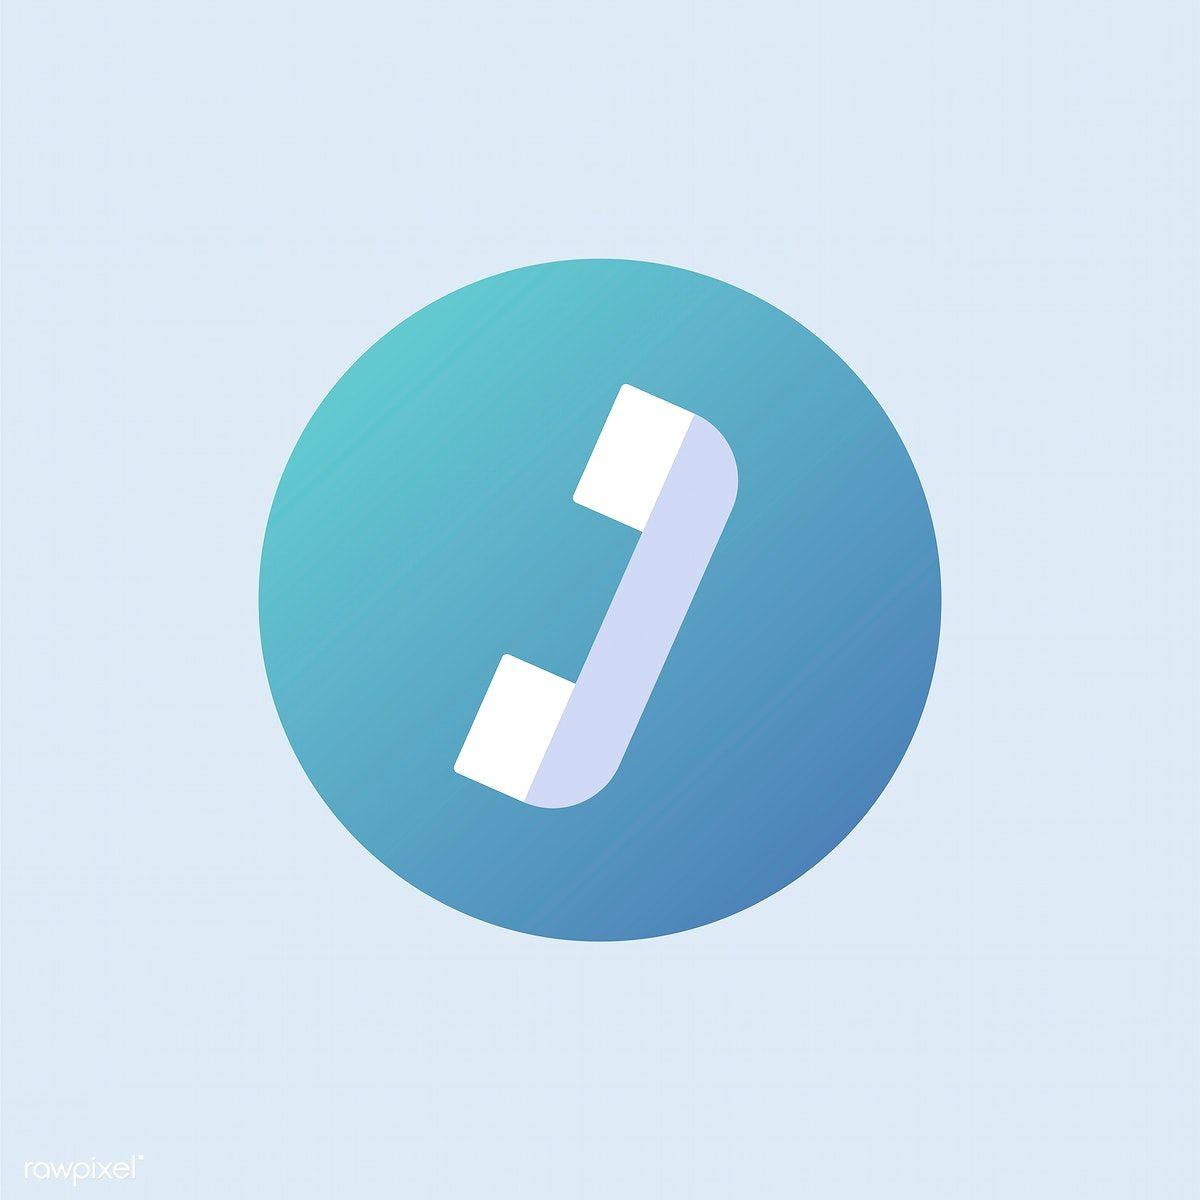 Blue Green Telephone Logo - Telephone logo vector in blue. Free stock vector